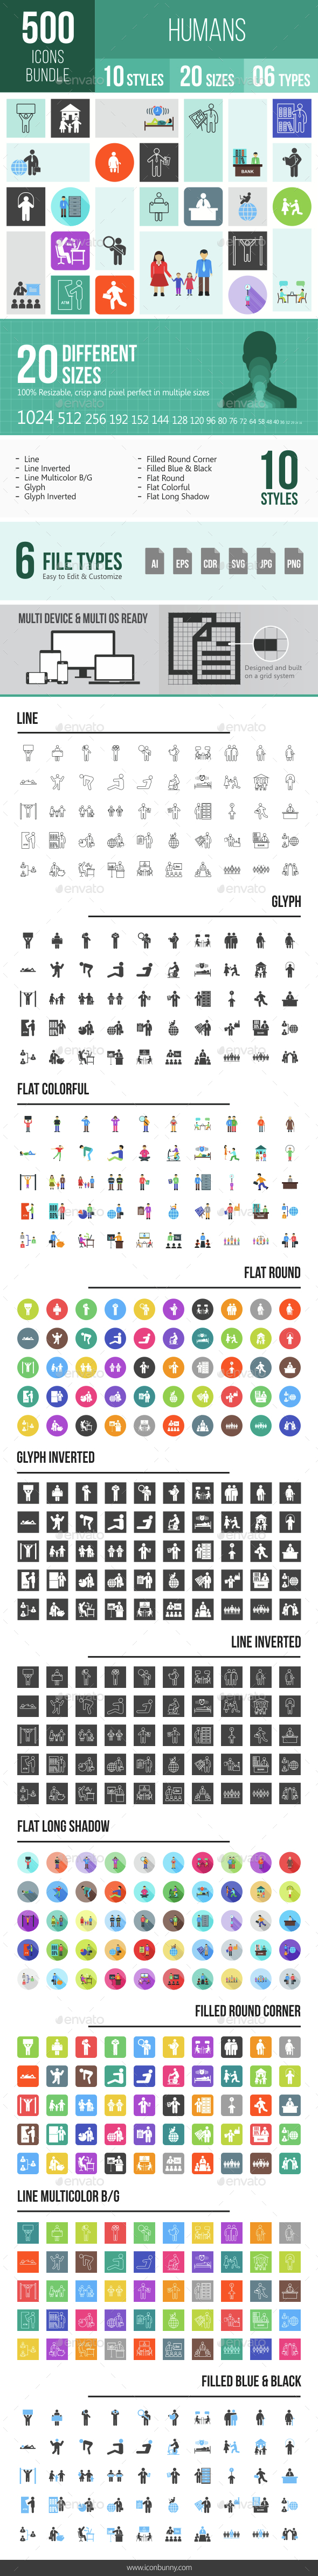 500 Humans Icons Bundle